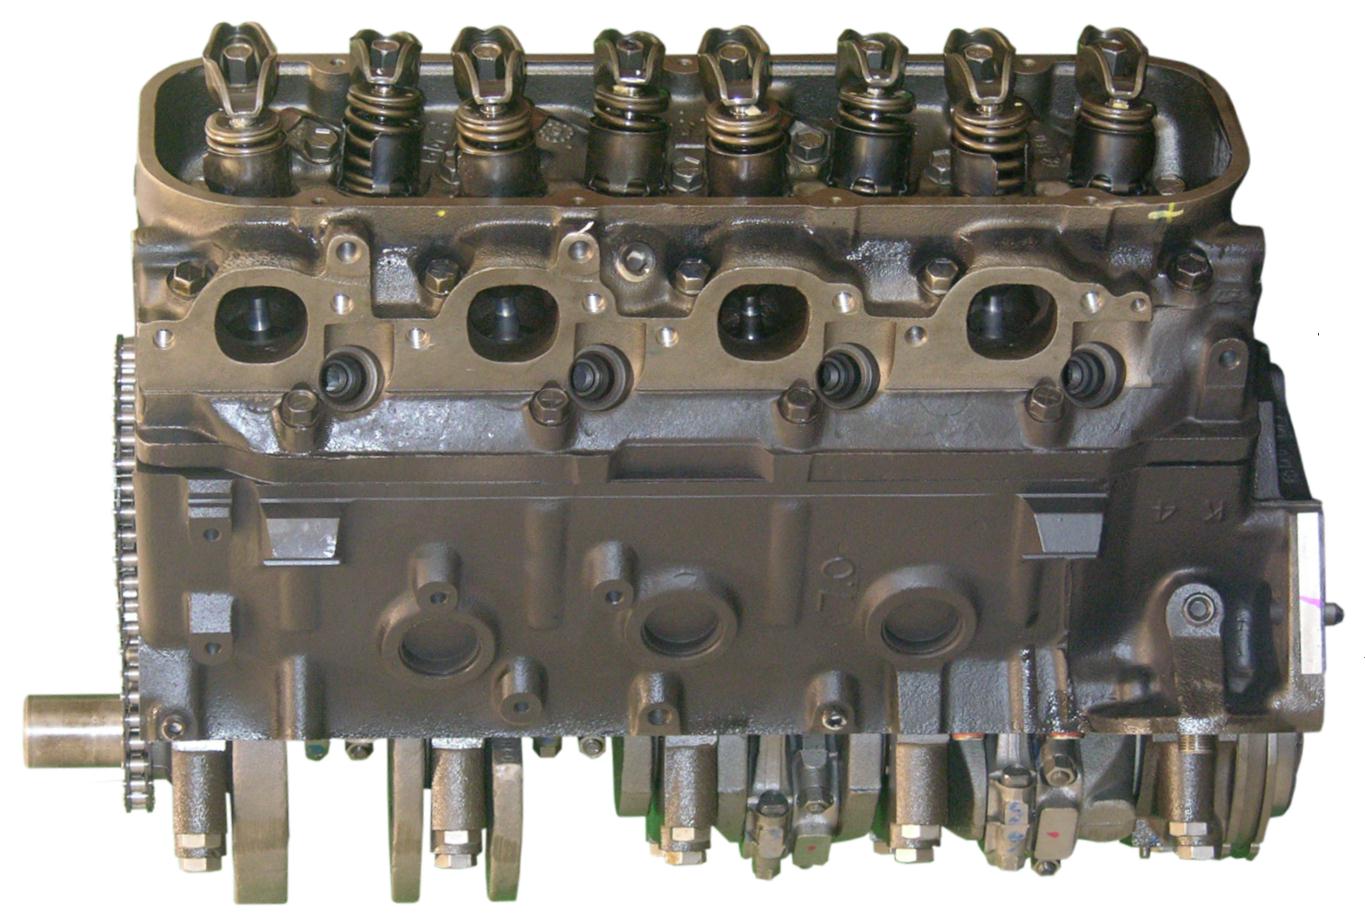 Chevy 7.0L V8 Remanufactured Engine - 1991-1995